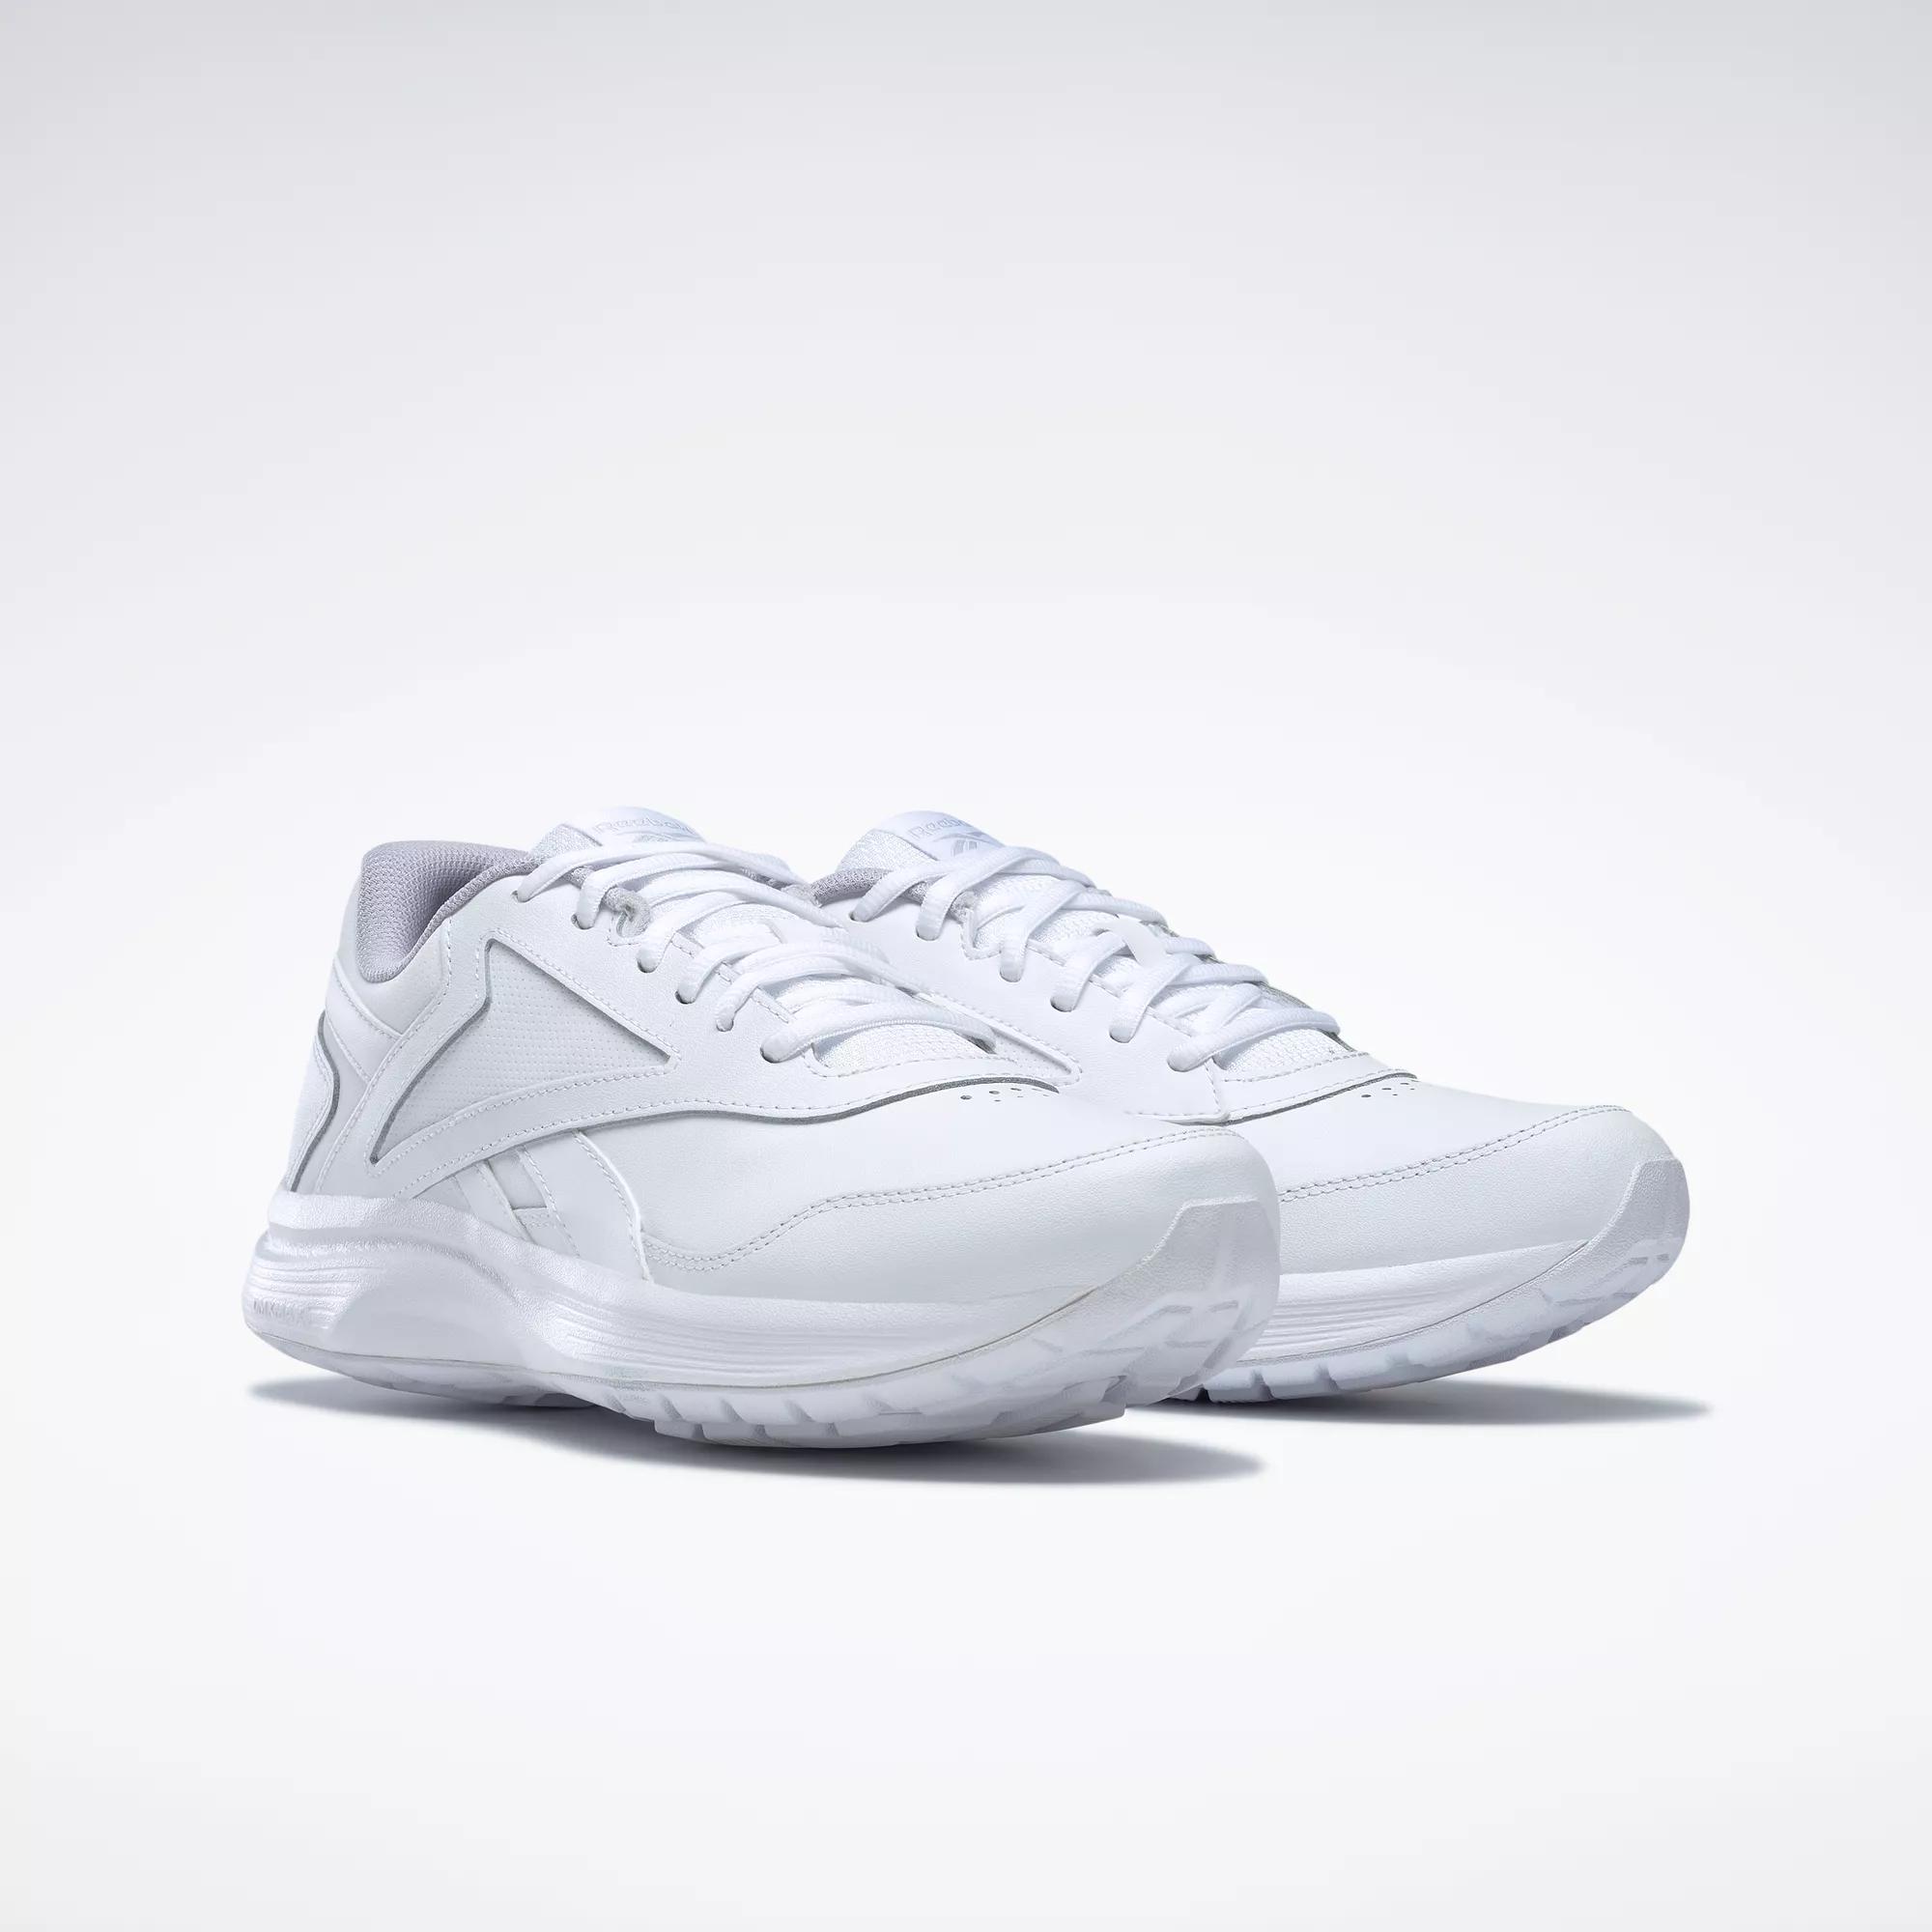 Portræt bænk syv Walk Ultra 7 DMX MAX Men's Shoes - White / Cold Grey 2 / White | Reebok